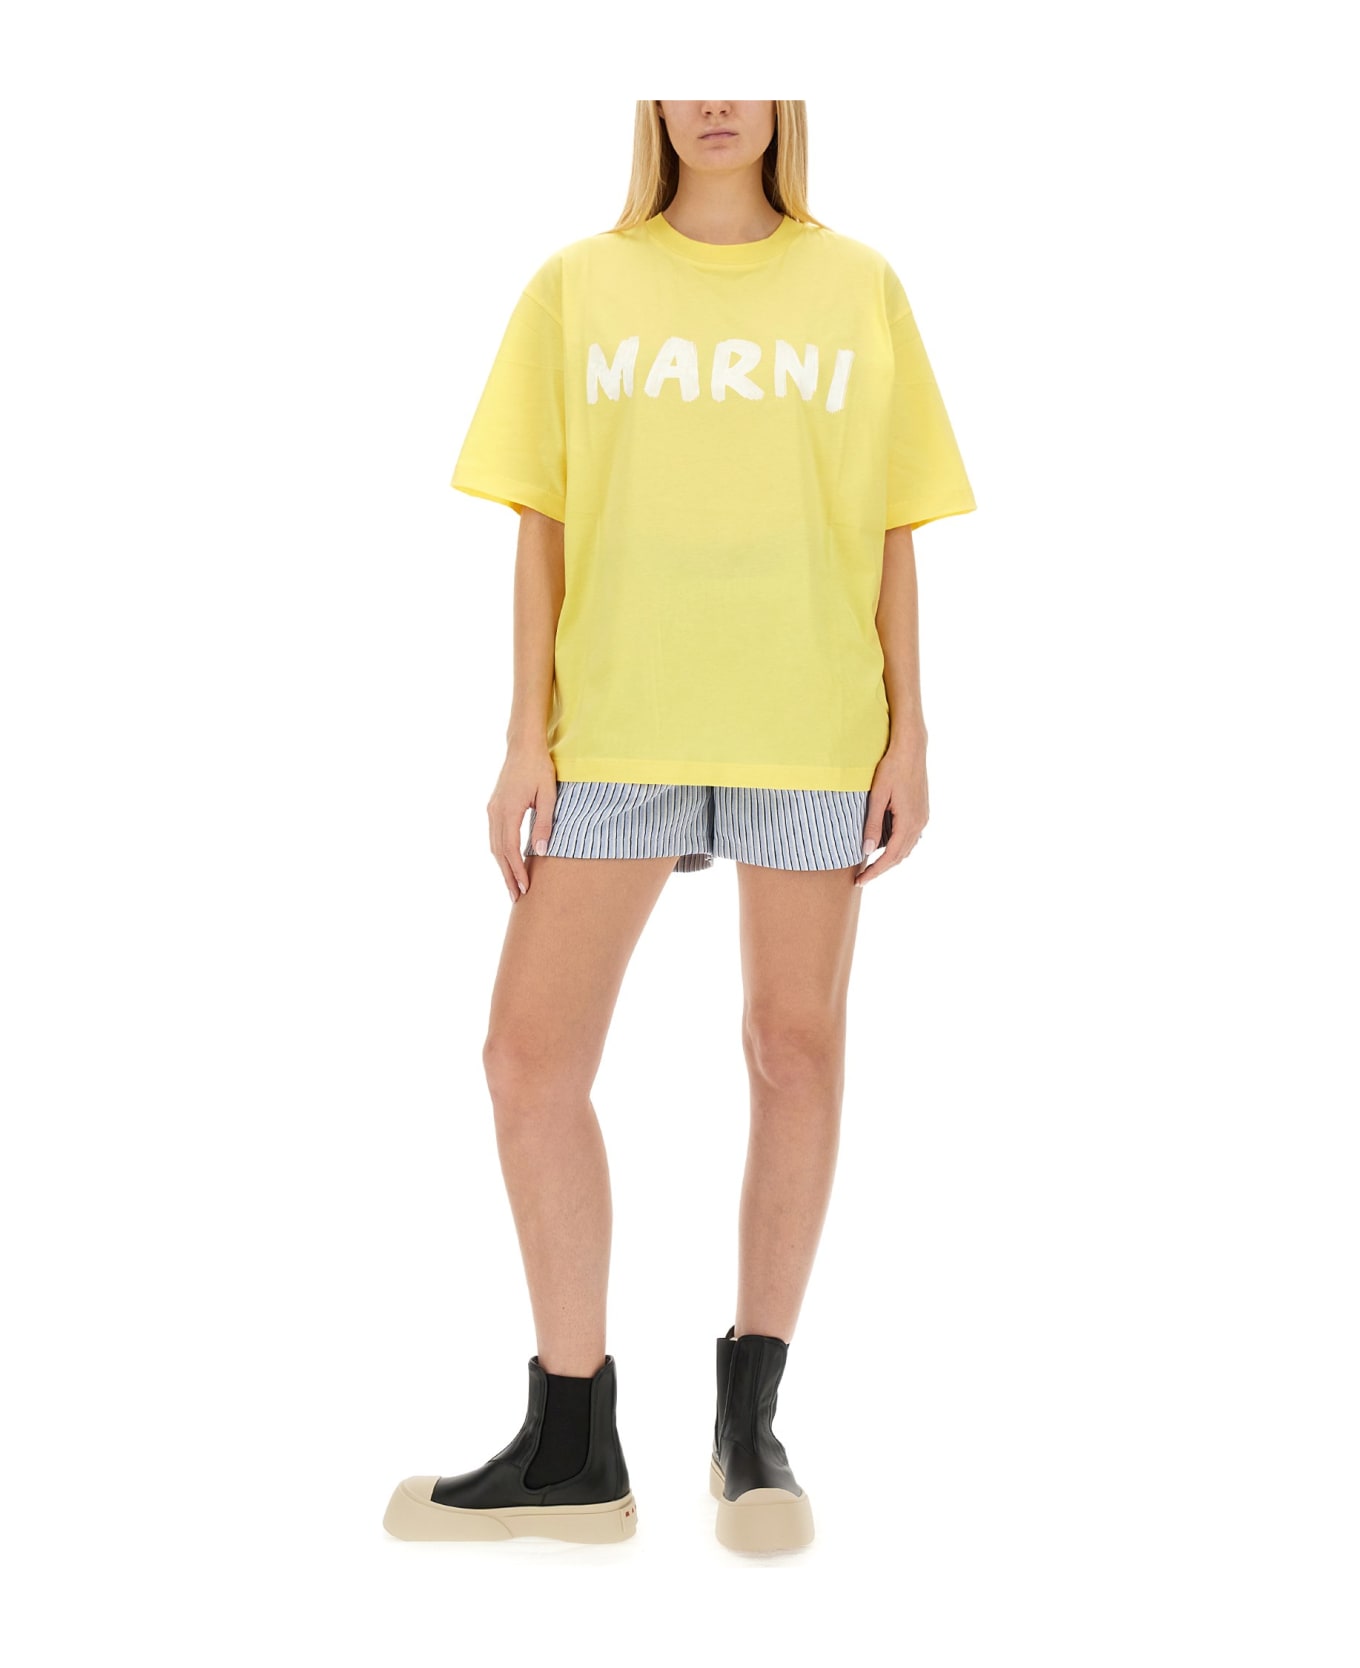 Marni T-shirt With Logo - GIALLO